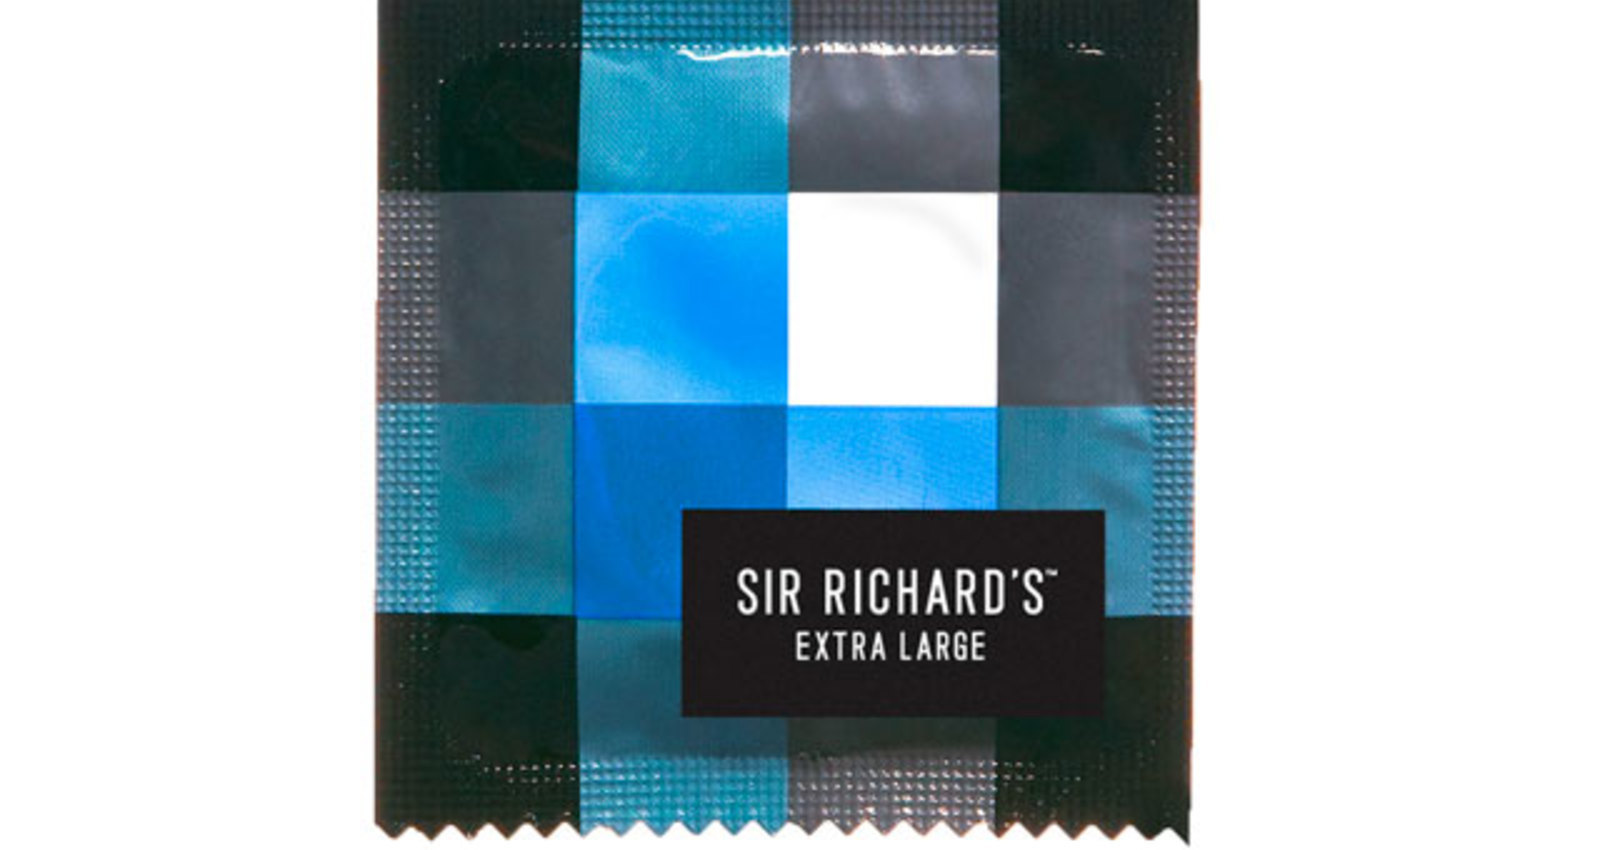 Sir Richard's Package Design